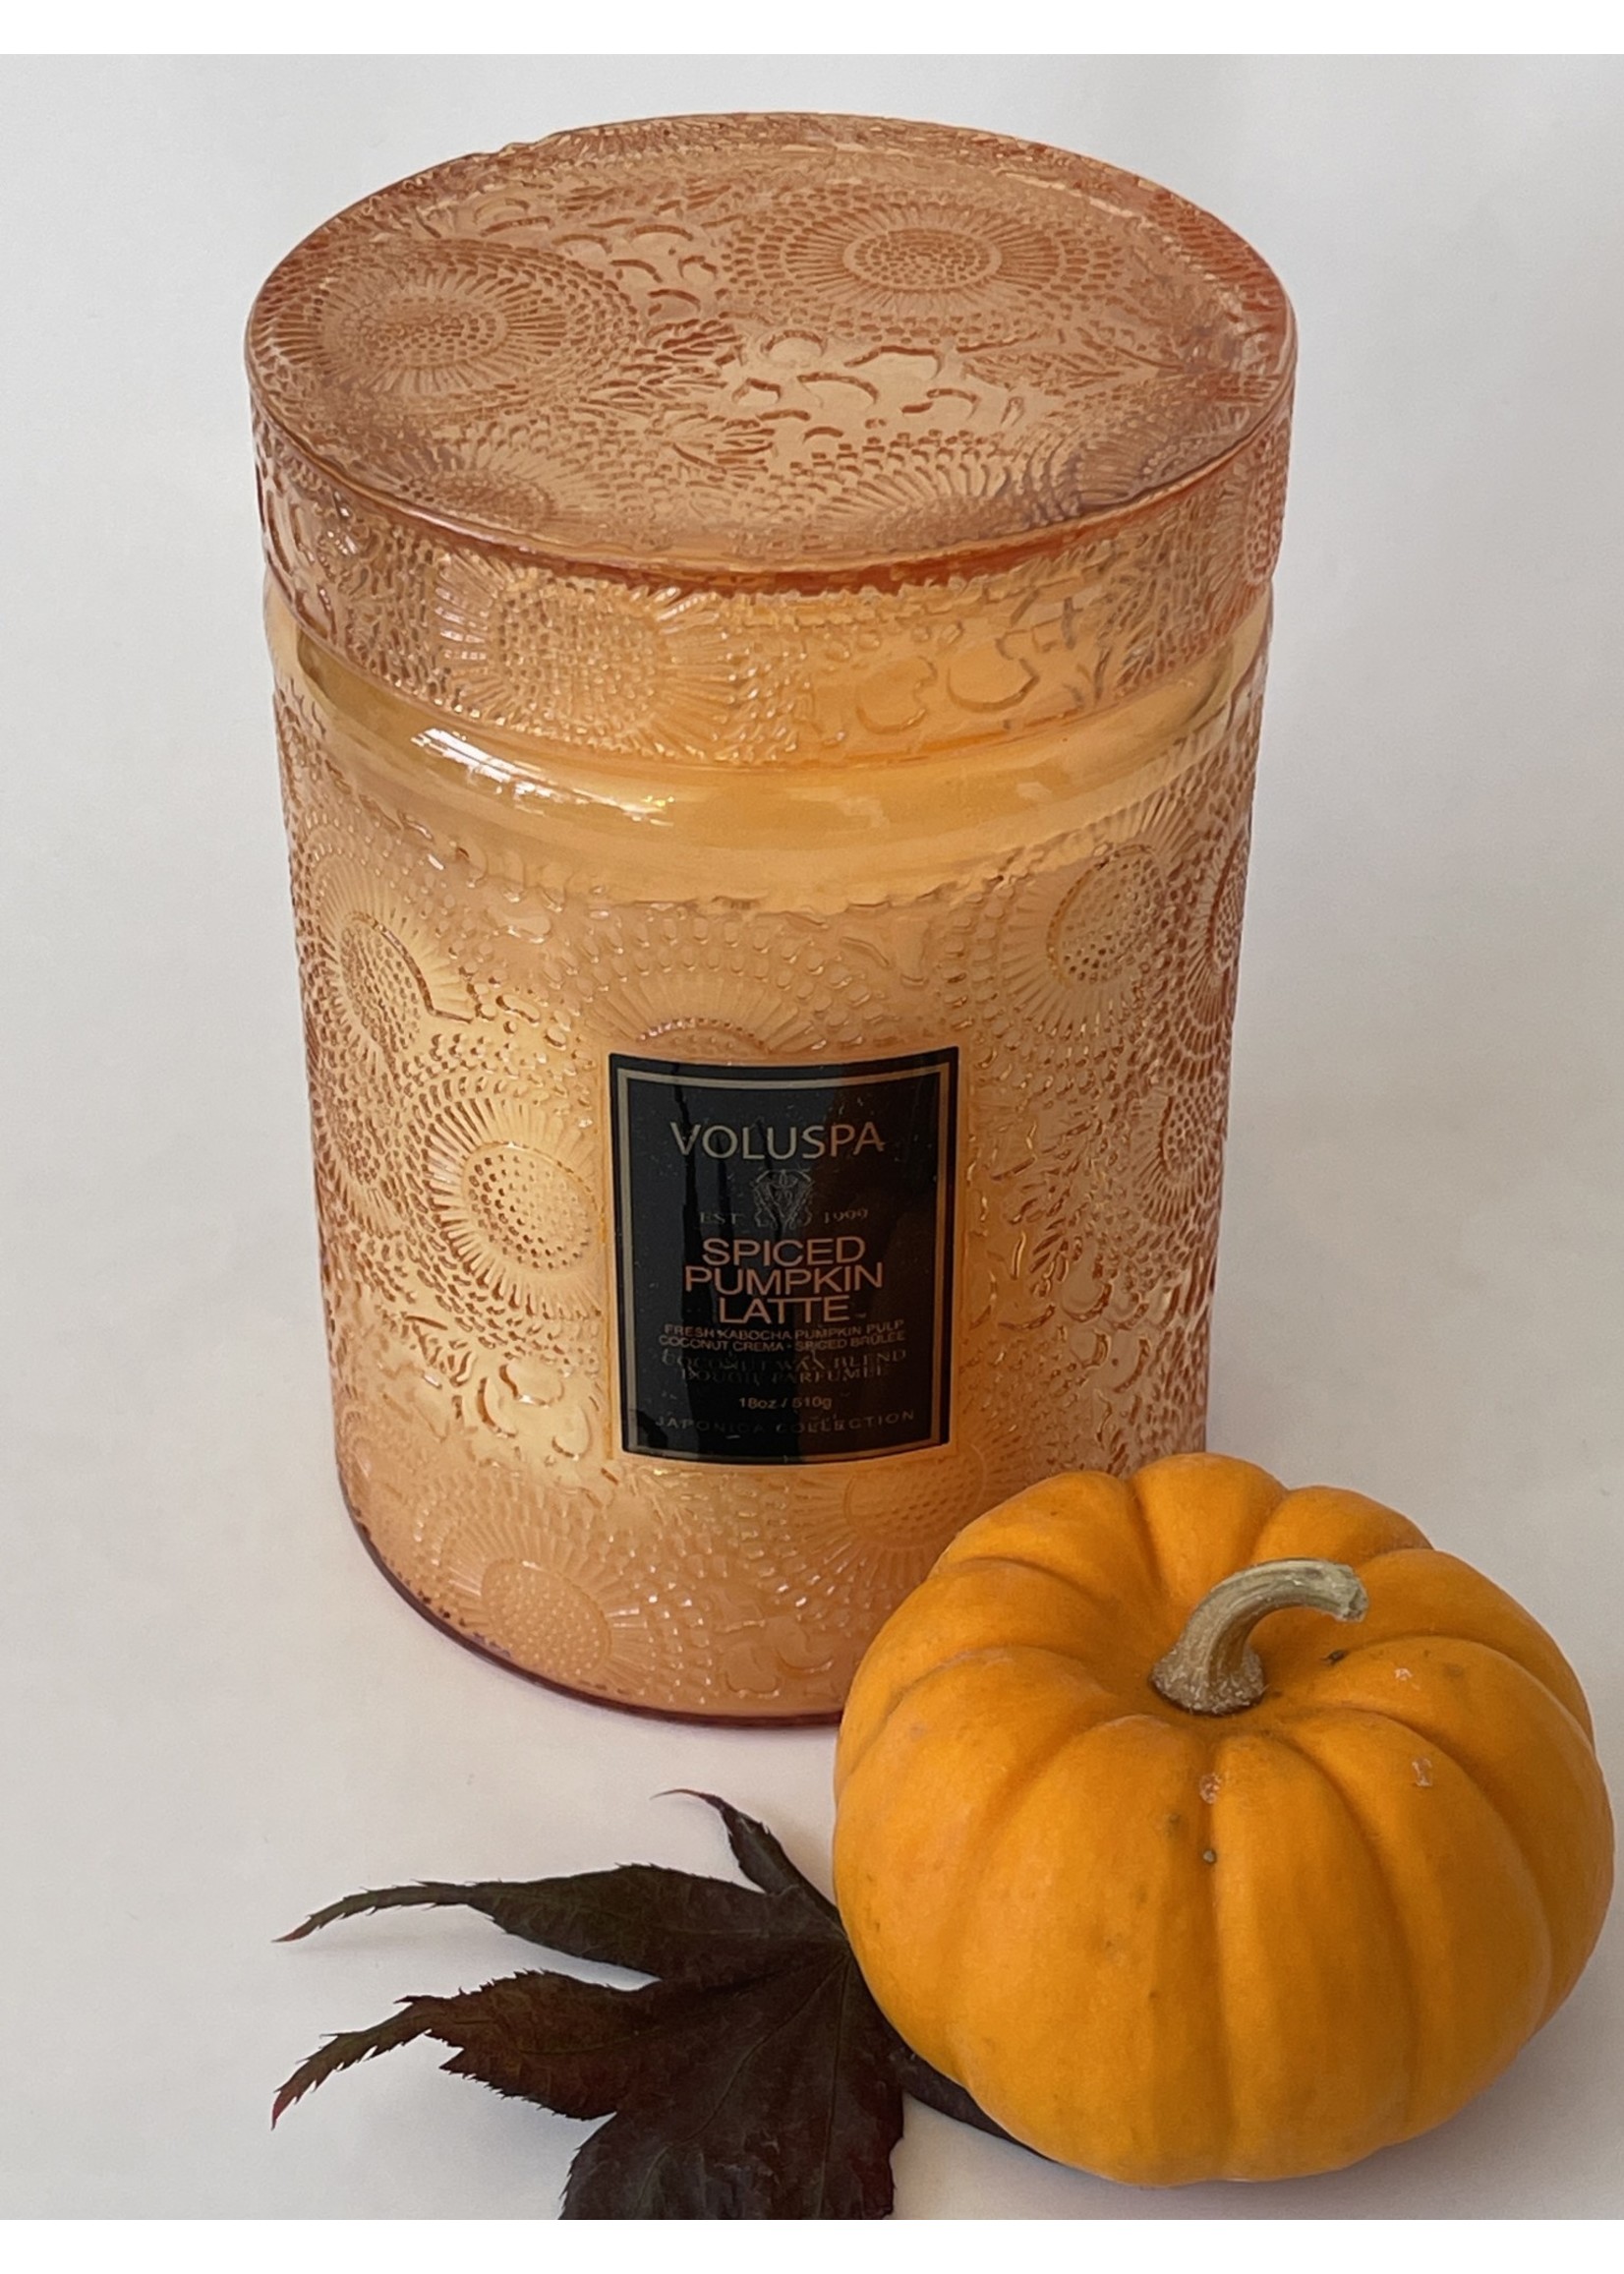 Voluspa Spiced Pumpkin Latte Large Jar